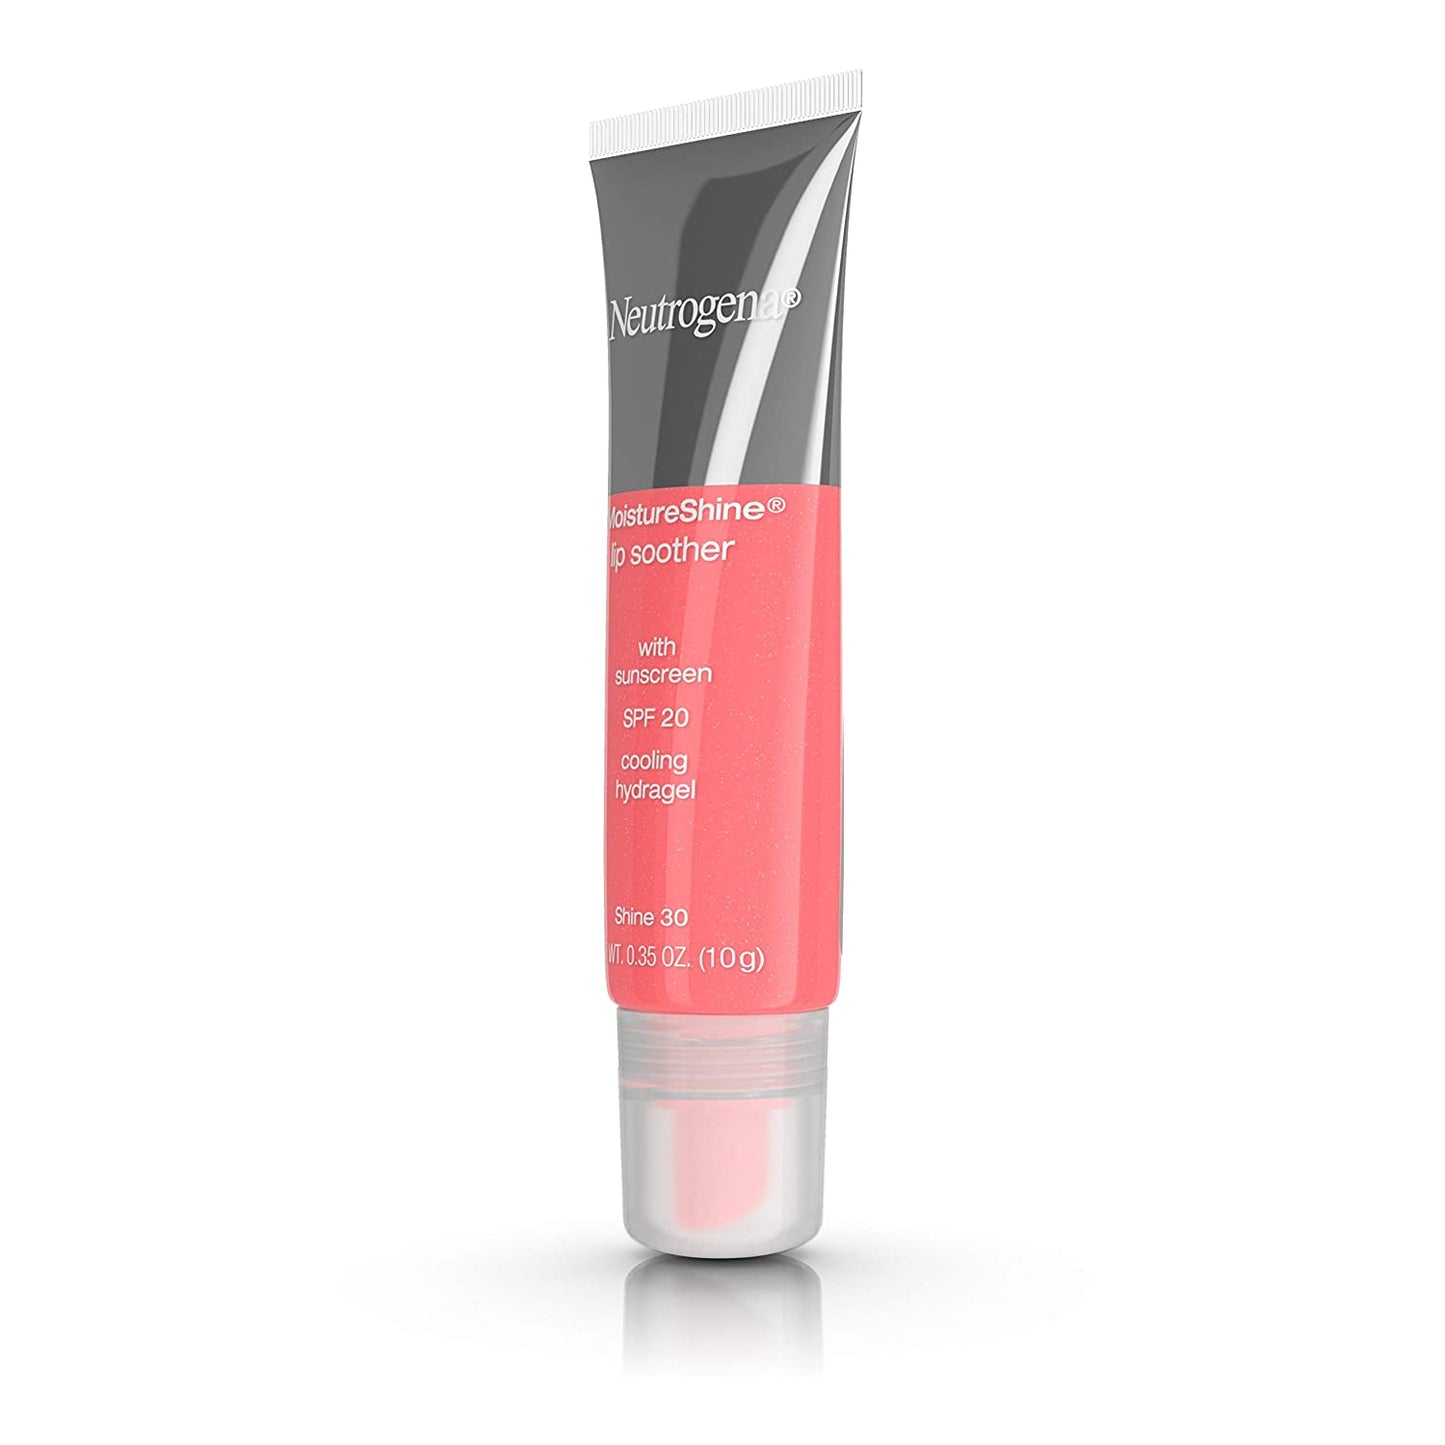 Neutrogena MoistureShine Lip Soother with Sunscreen SPF 20 Cooling Hydragel 0.35 oz. / 10g